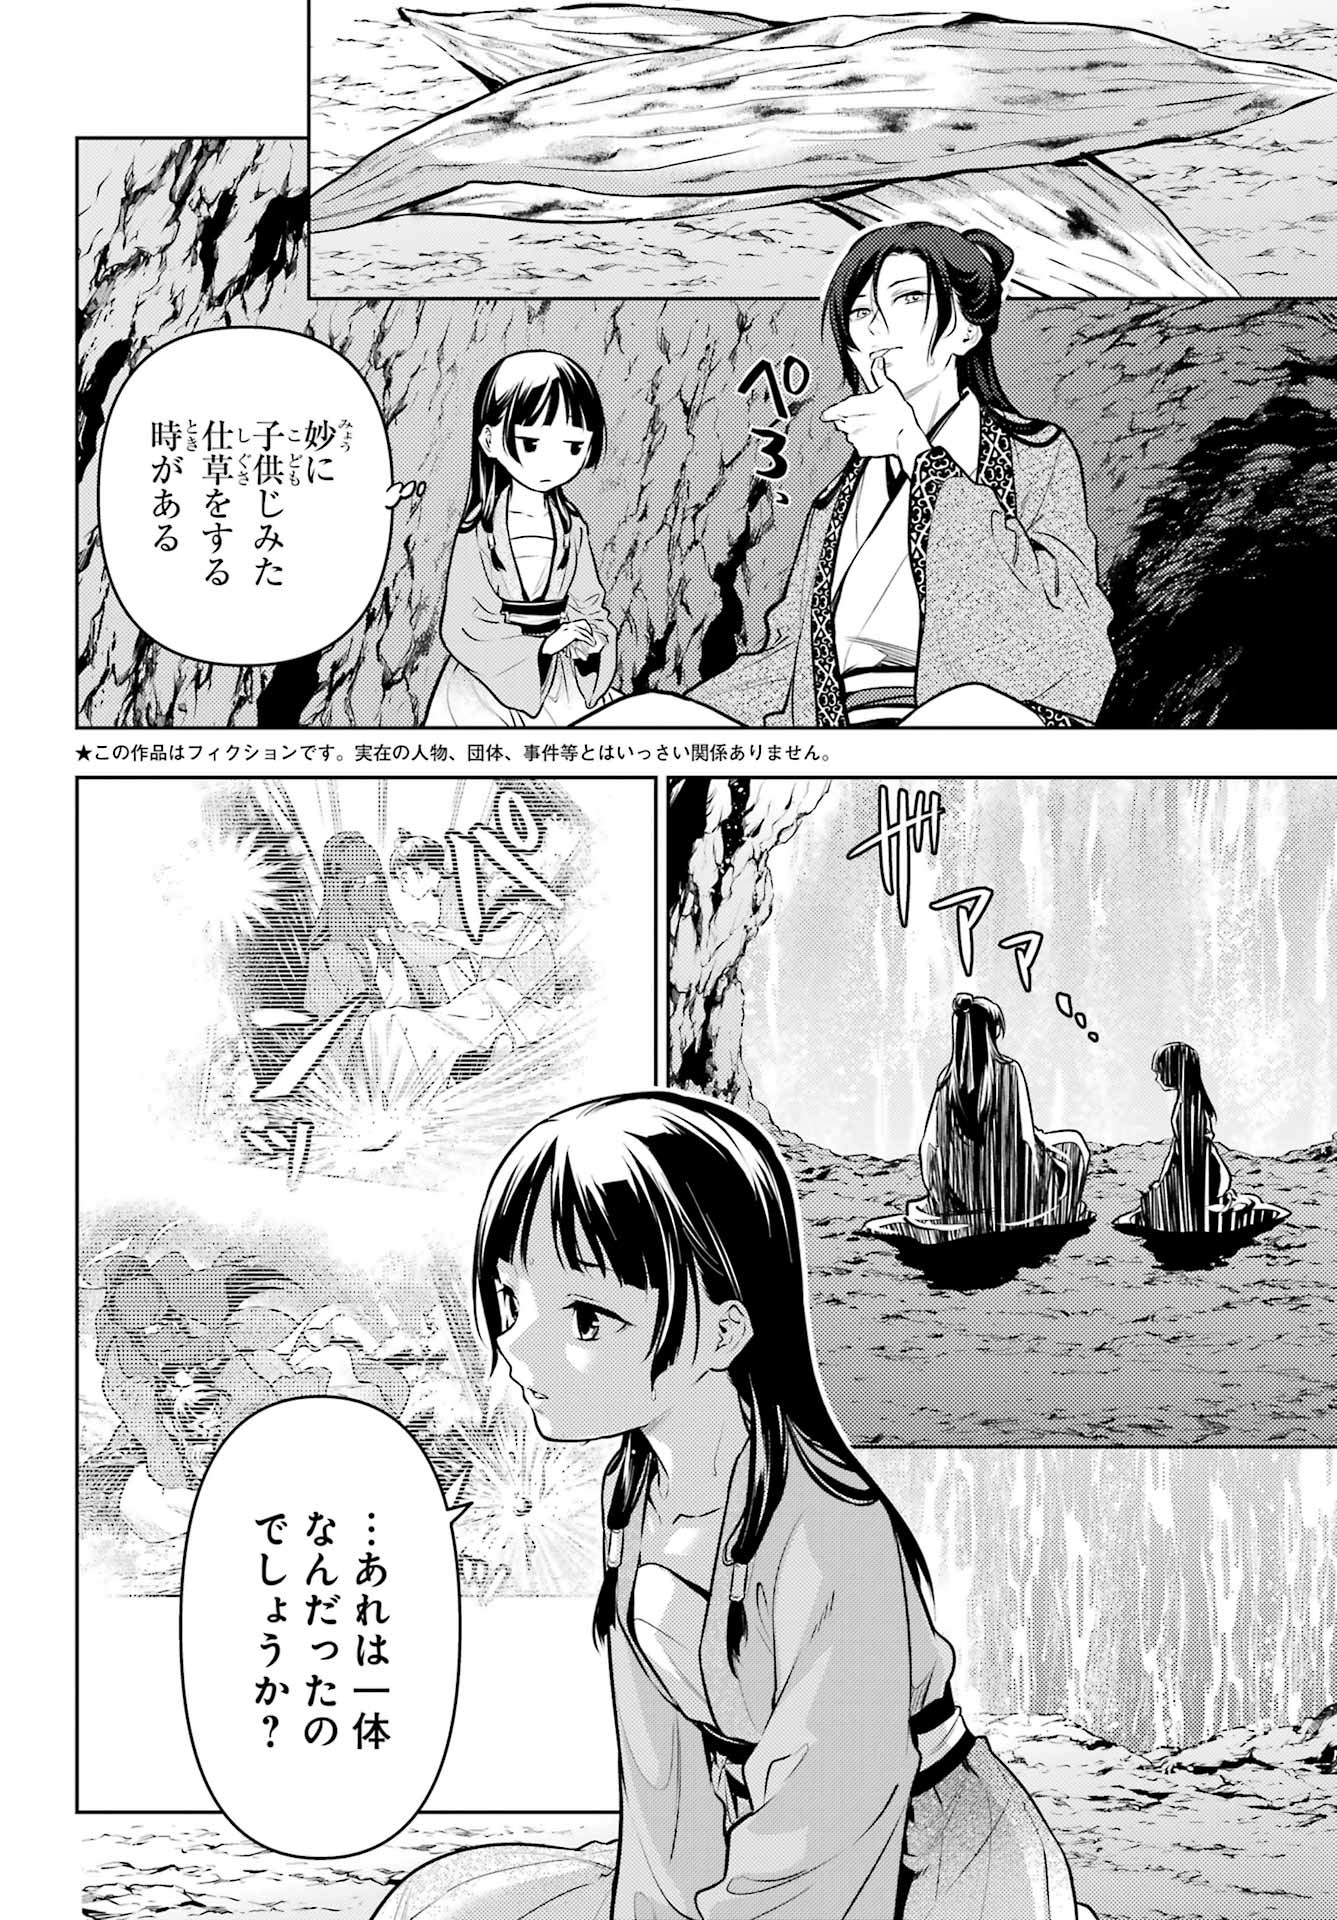 Kusuriya no Hitorigoto - Chapter 63 - Page 2